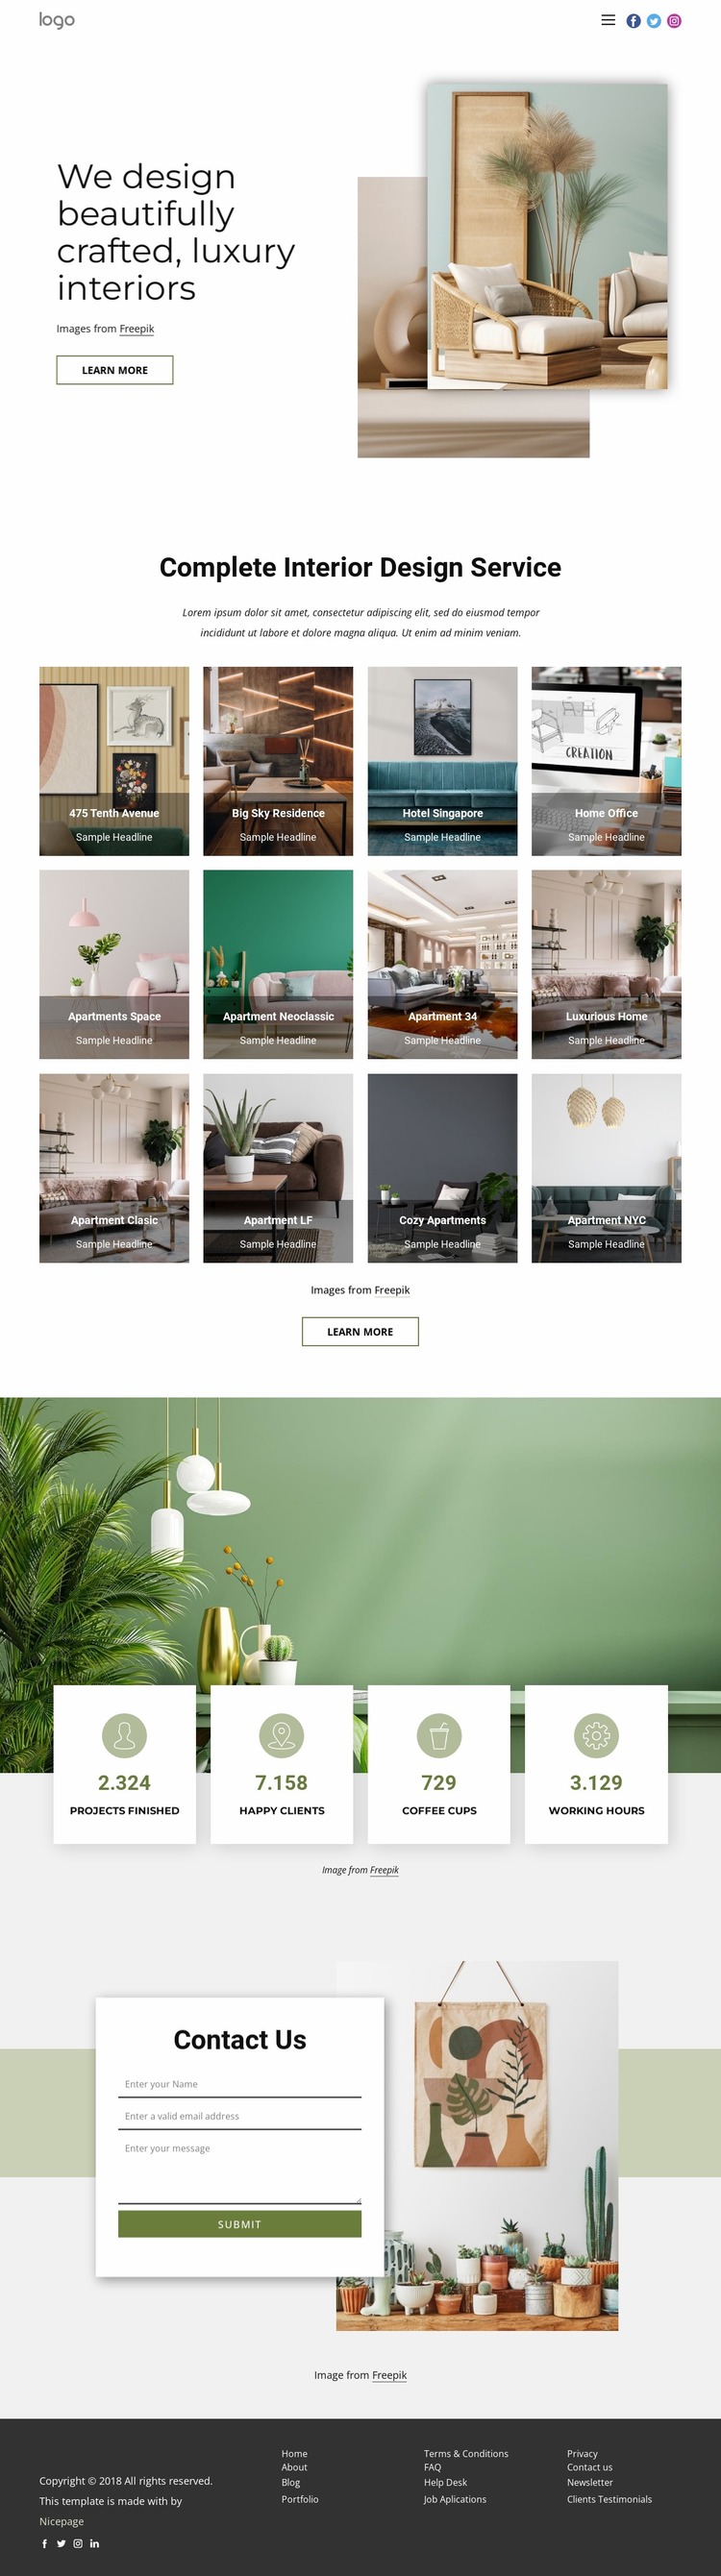 We design luxury interiors Website Mockup